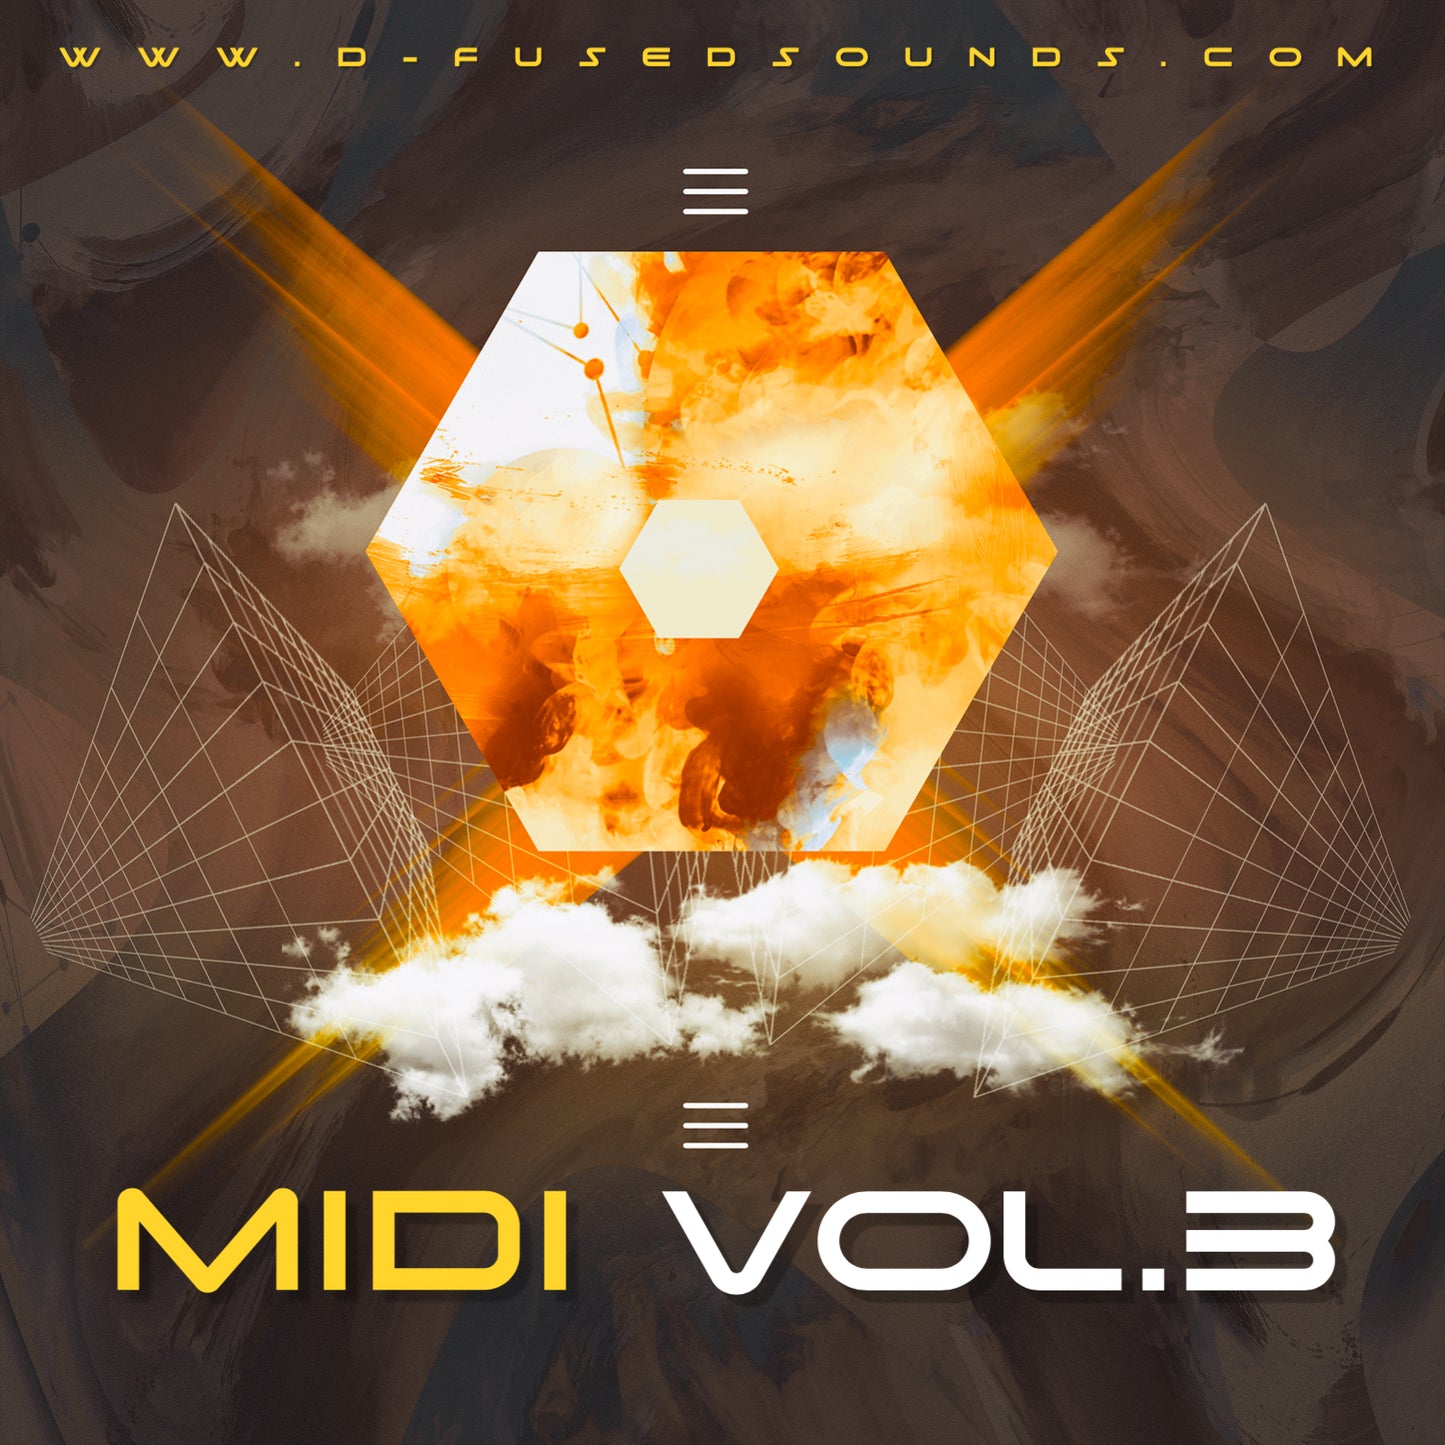 MIDI Vol. 3